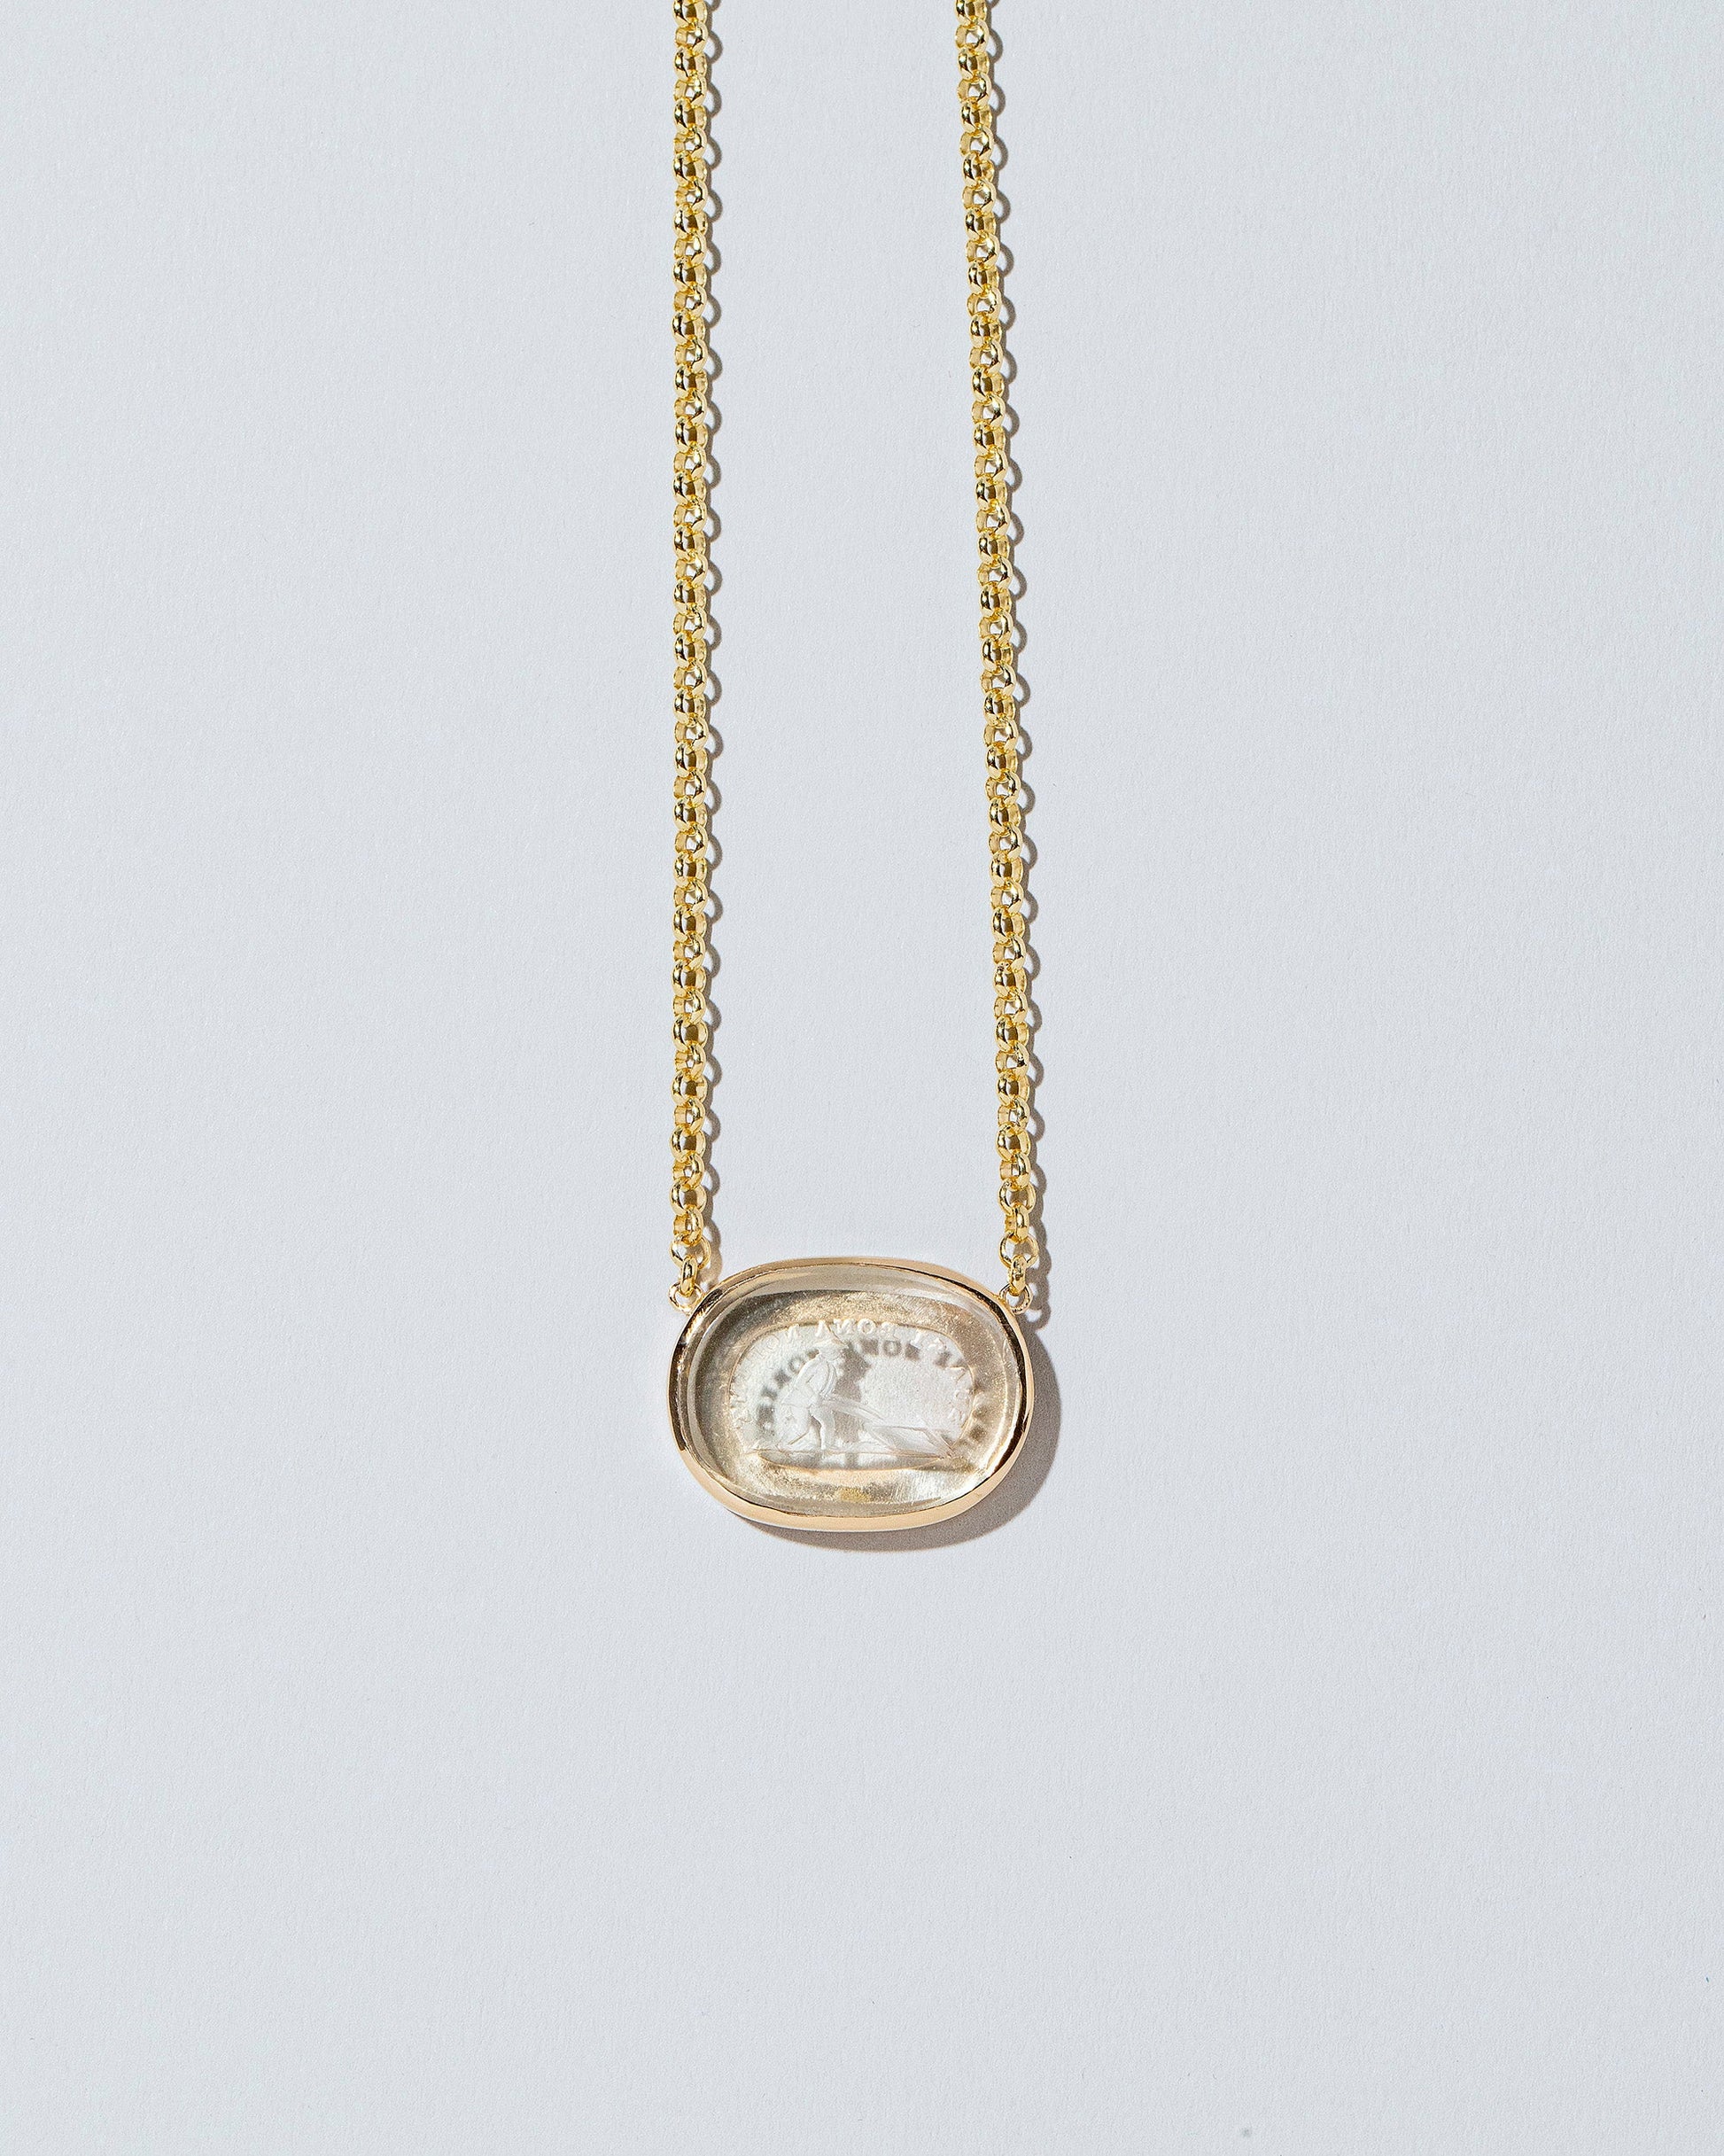  Simplicity Intaglio Seal Necklace on light color background.